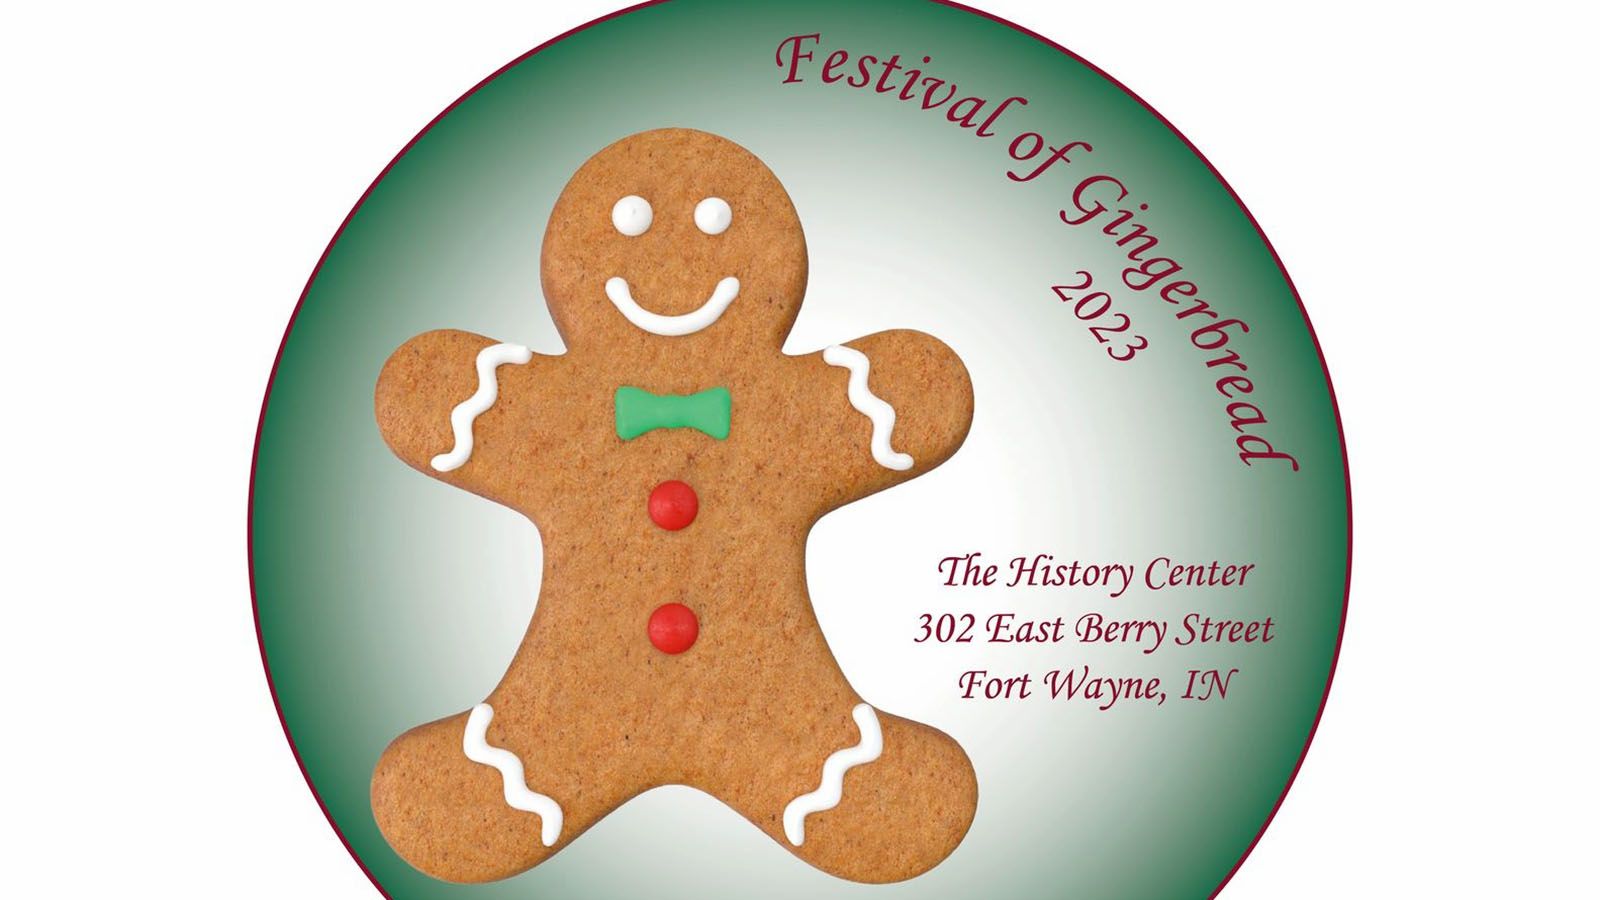 Festival of Gingerbread returns to The History Center on Nov. 24.